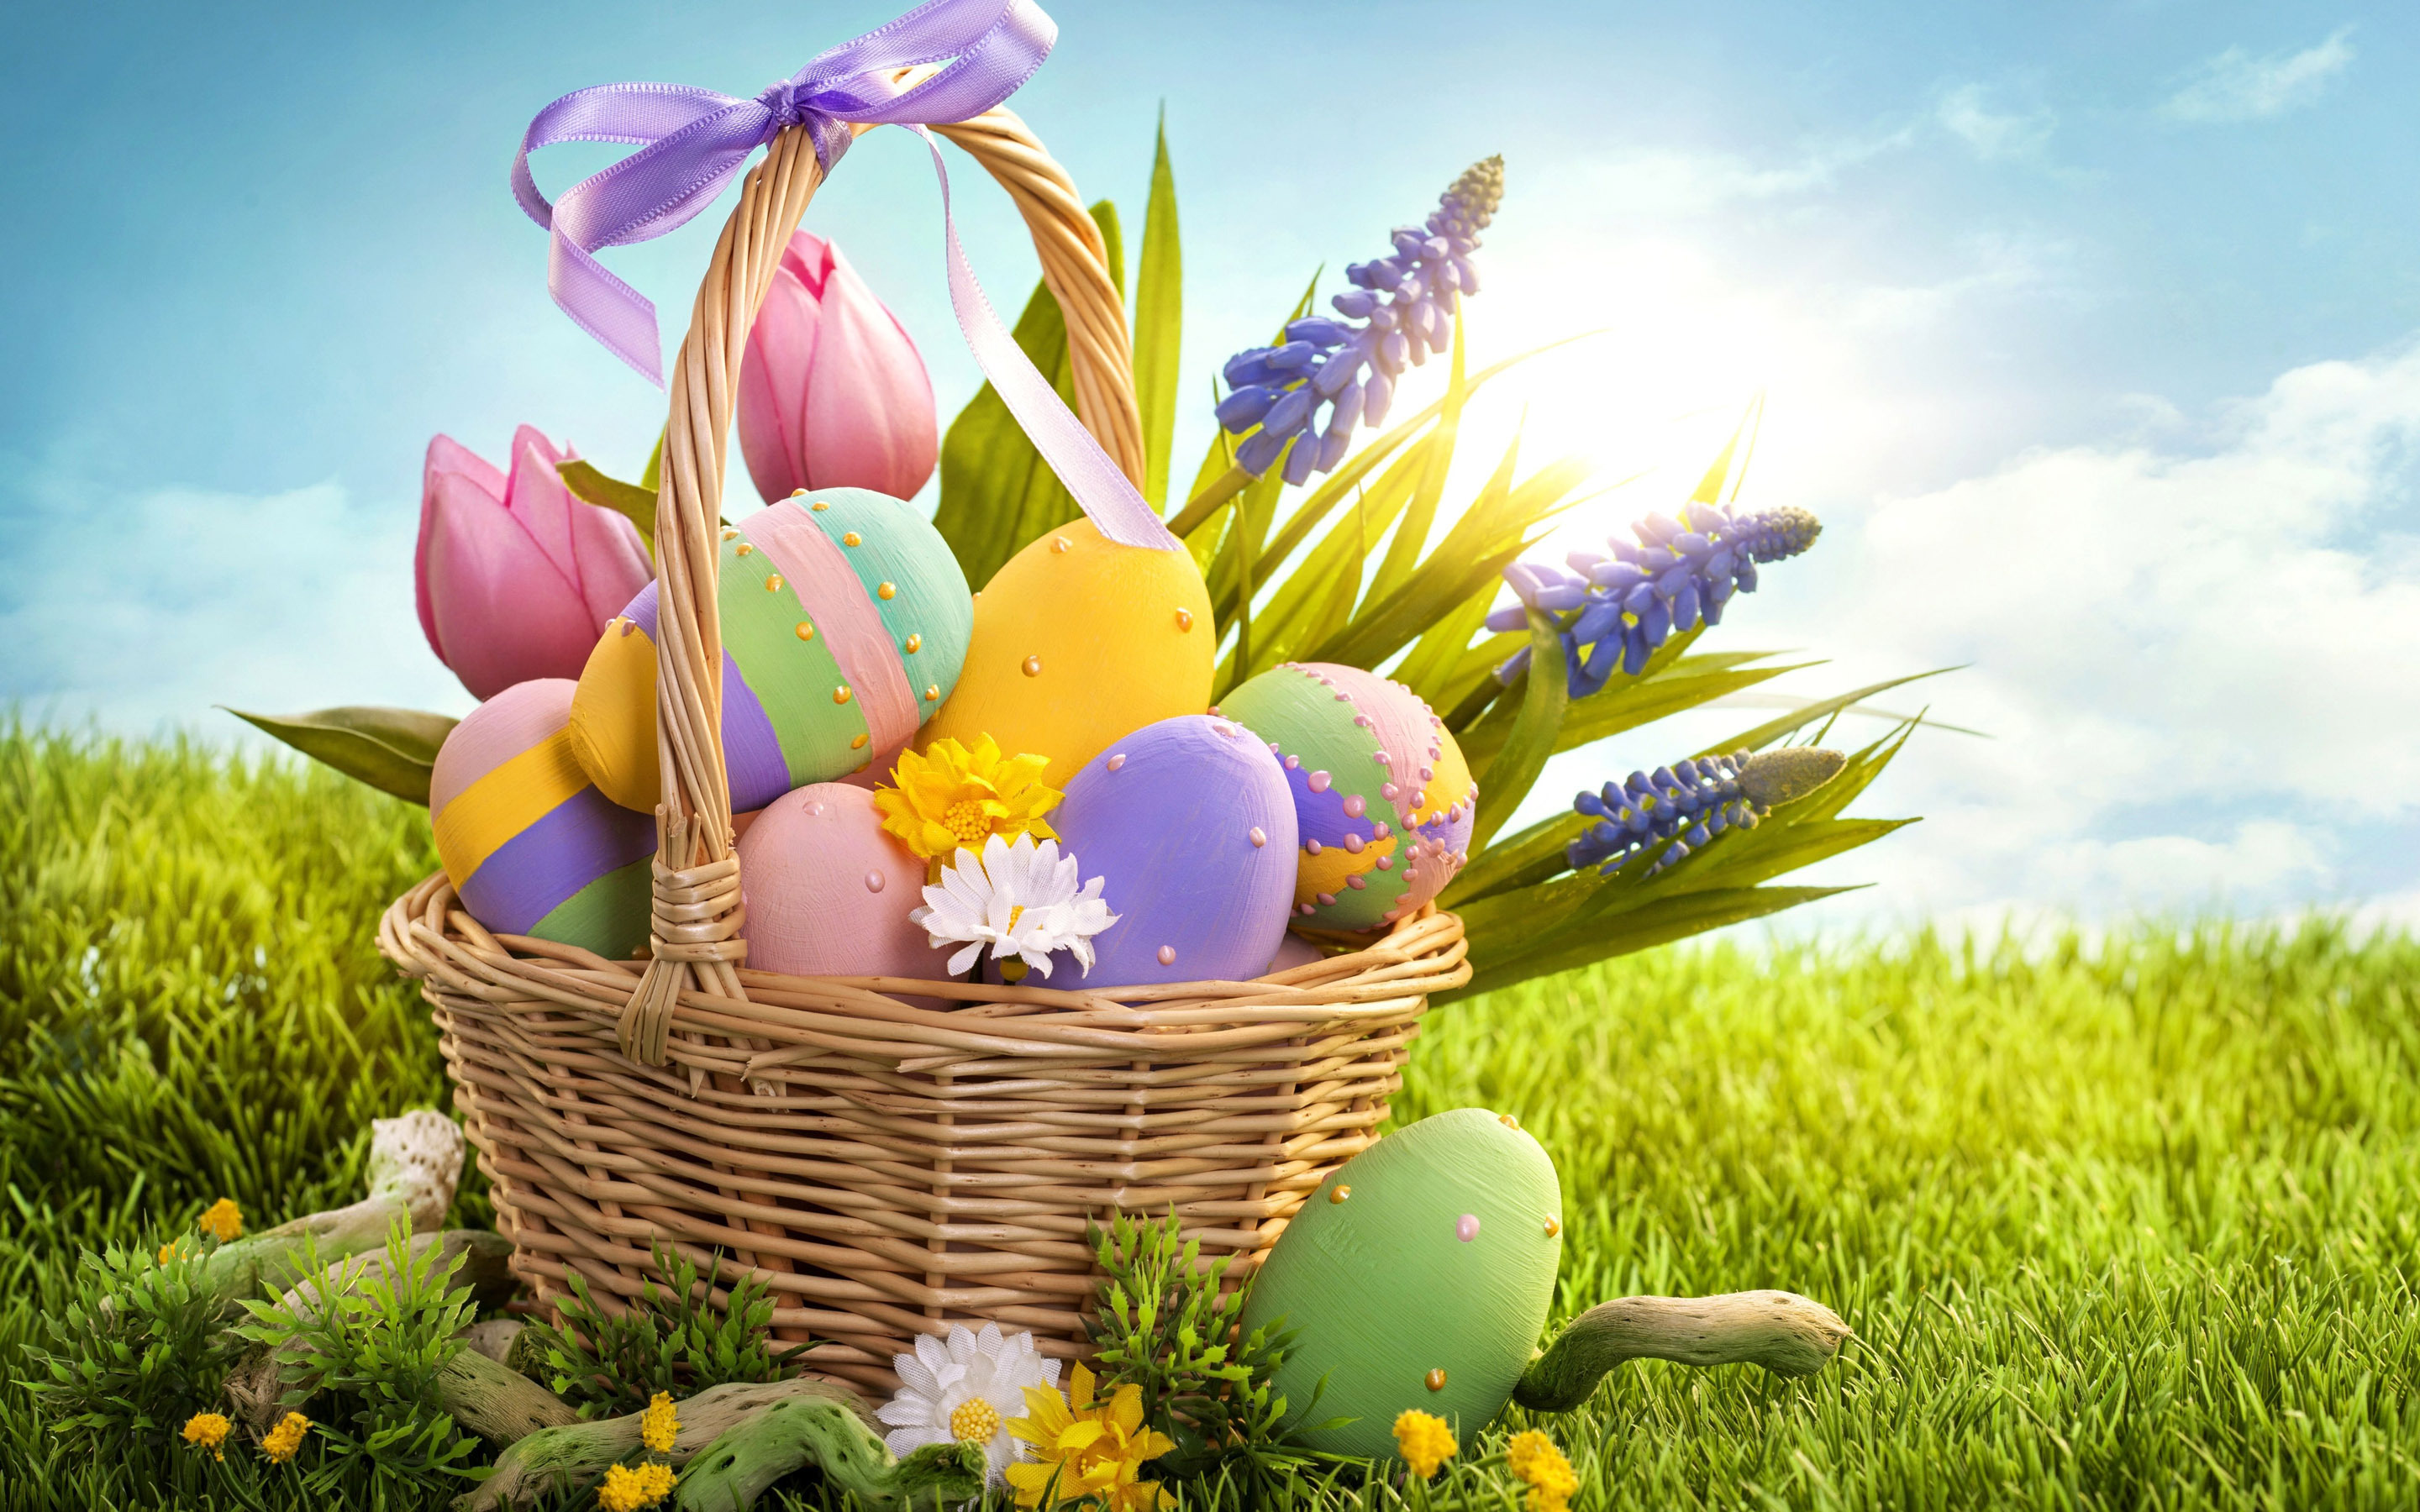 Easter Puter Wallpaper HD Image